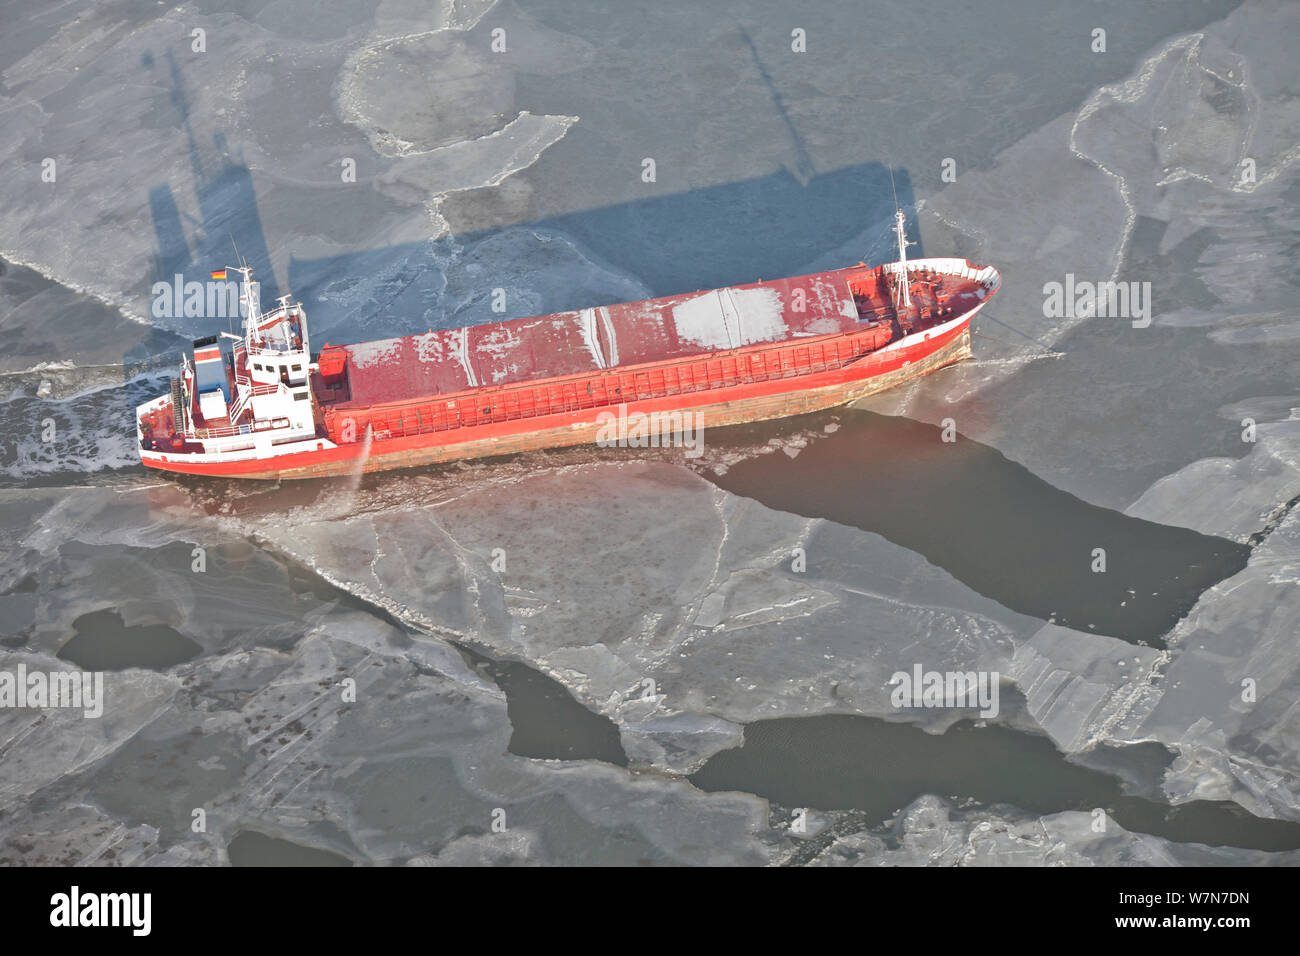 Ship breaking through sea ice. North Sea, Wadden Sea, Germany, February 2012. Stock Photo